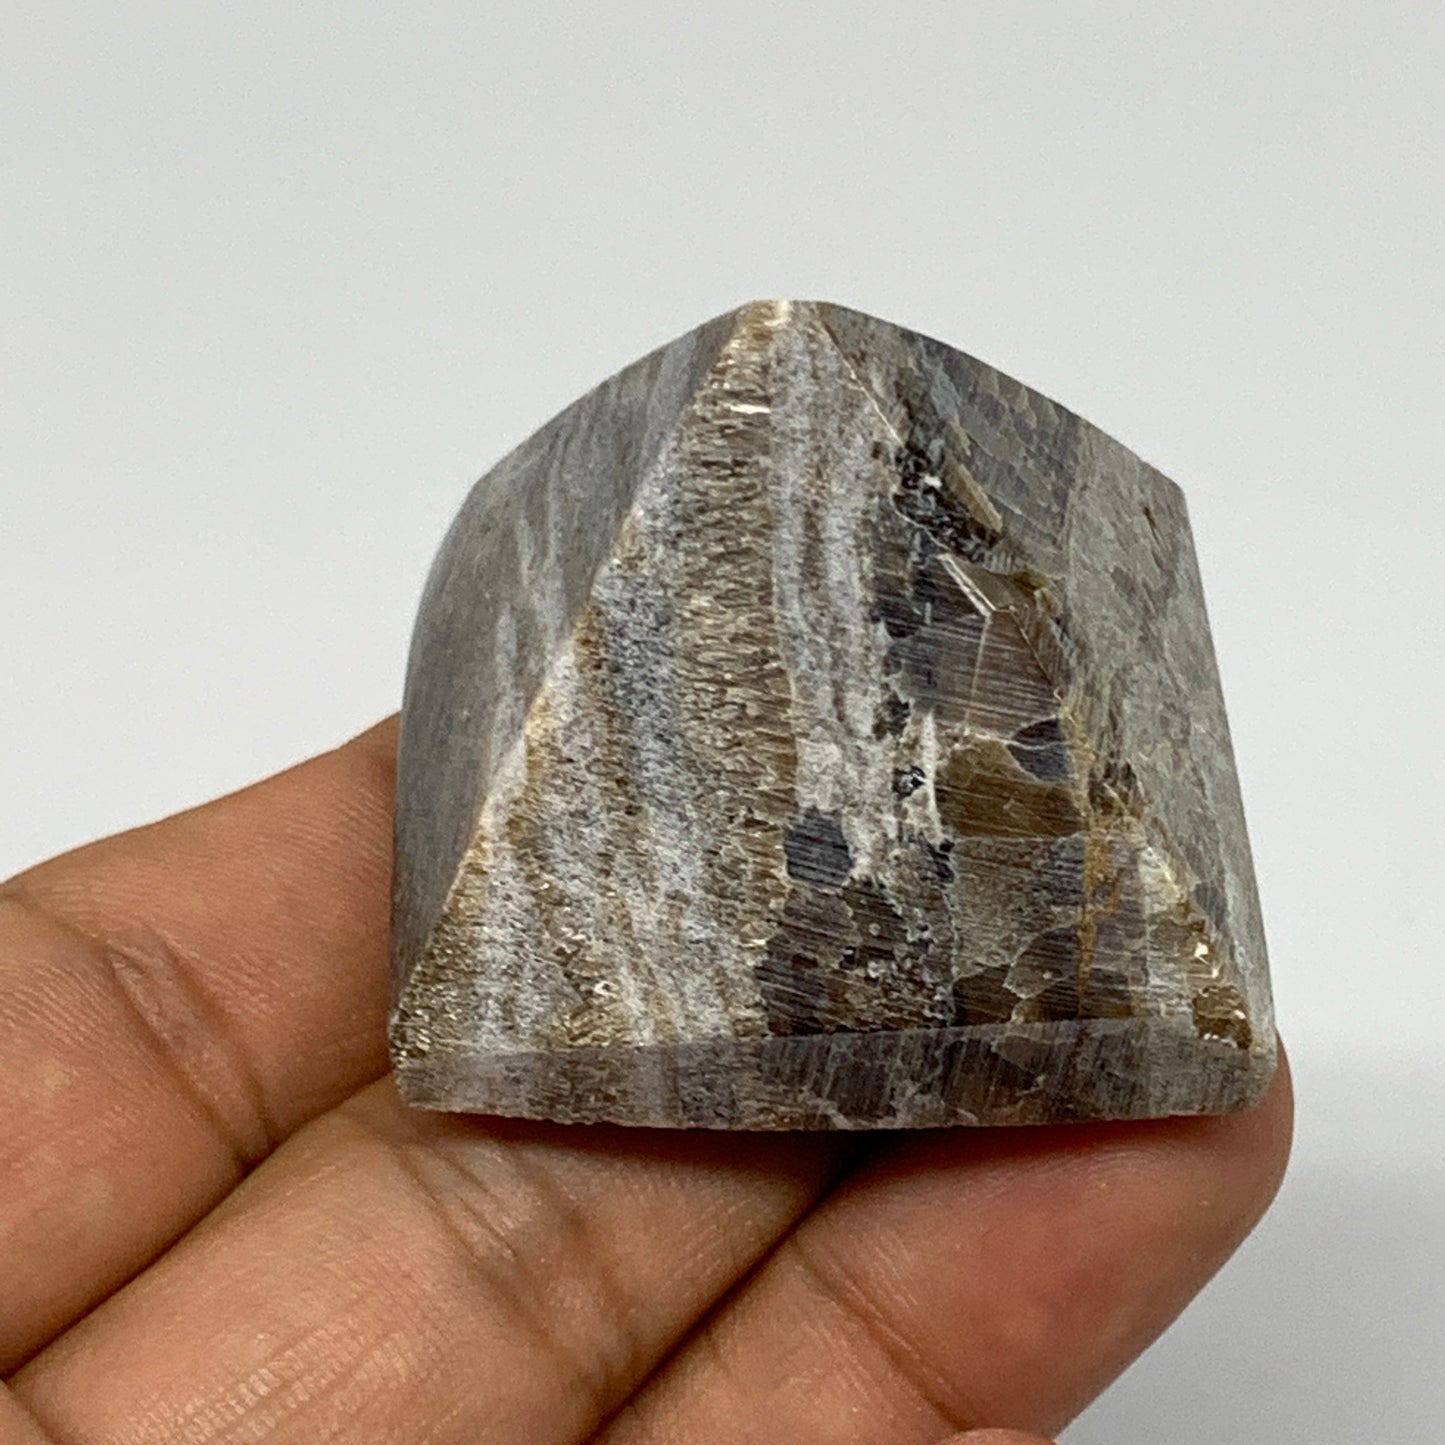 55.8g, 1.2"x1.6"x1.6" Chocolate/Gray Onyx Pyramid Gemstone @Morocco, B19007